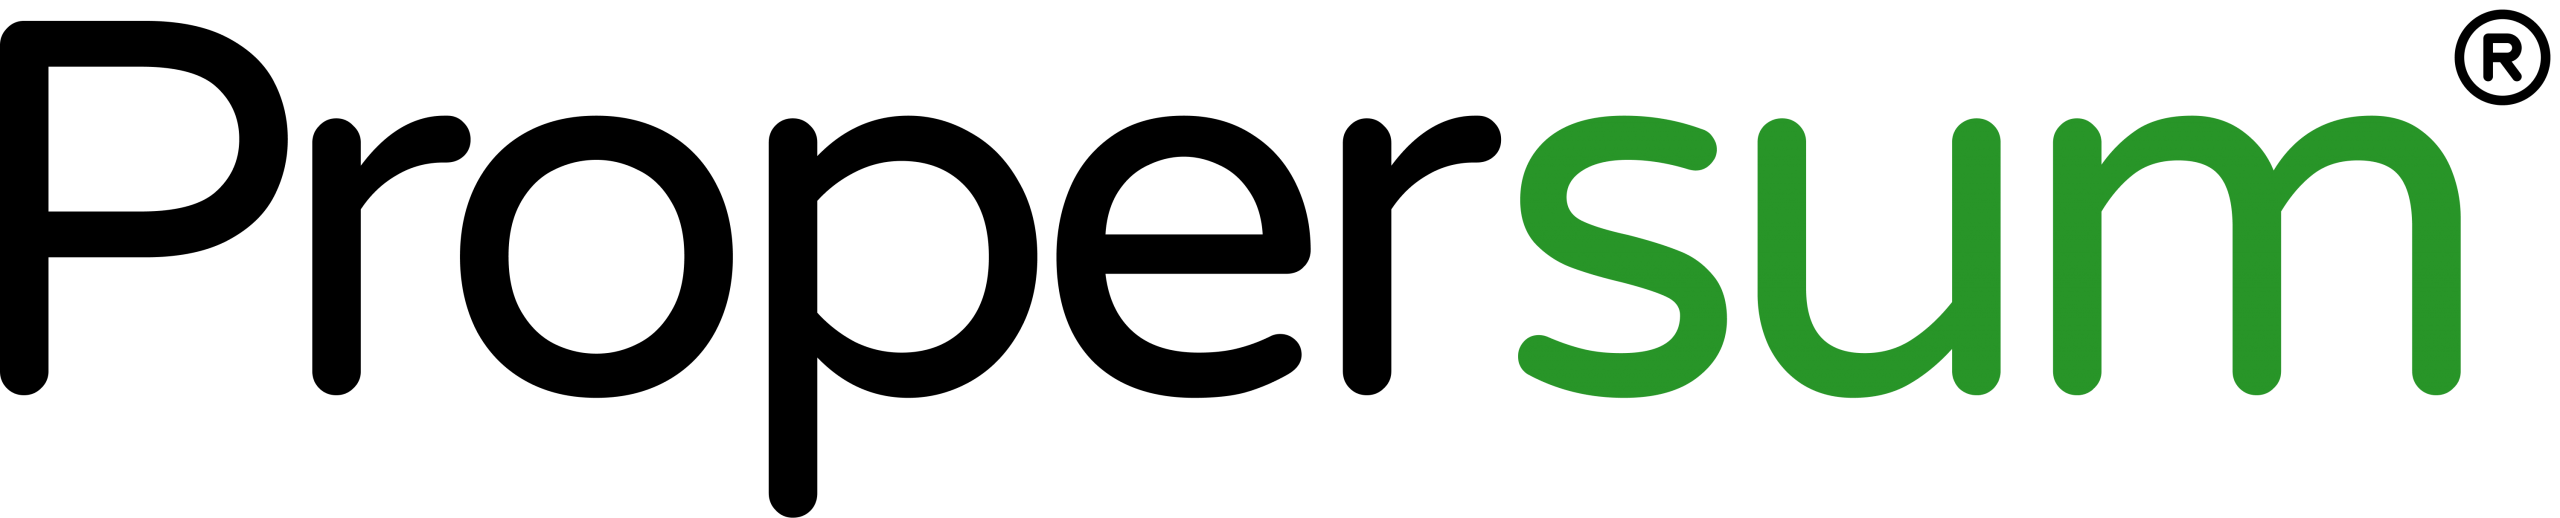 Propersum-Logo_blackandgreen